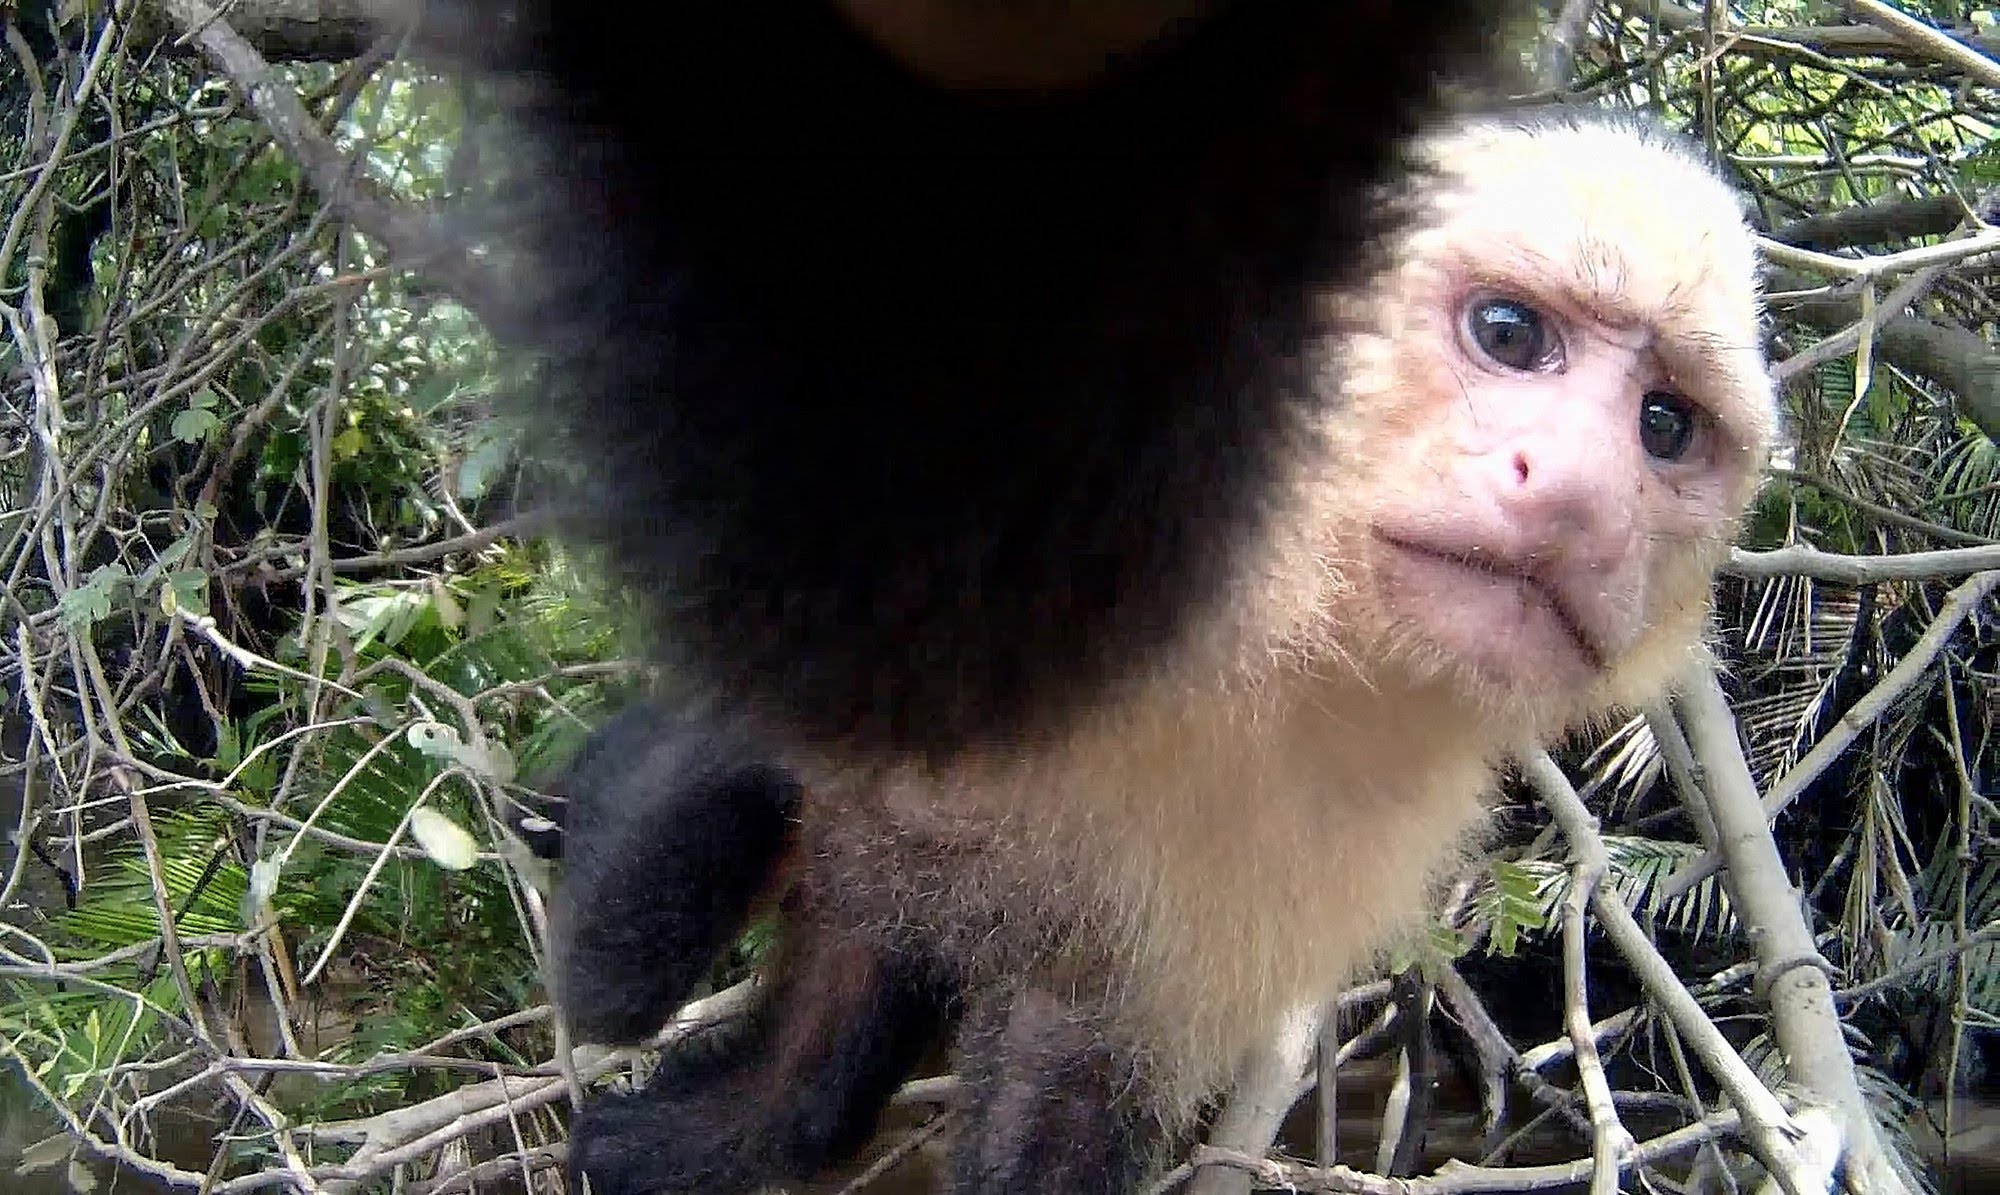 Polaroid Action HD: Wild Capuchin monkey grabs action camera! - YouTube